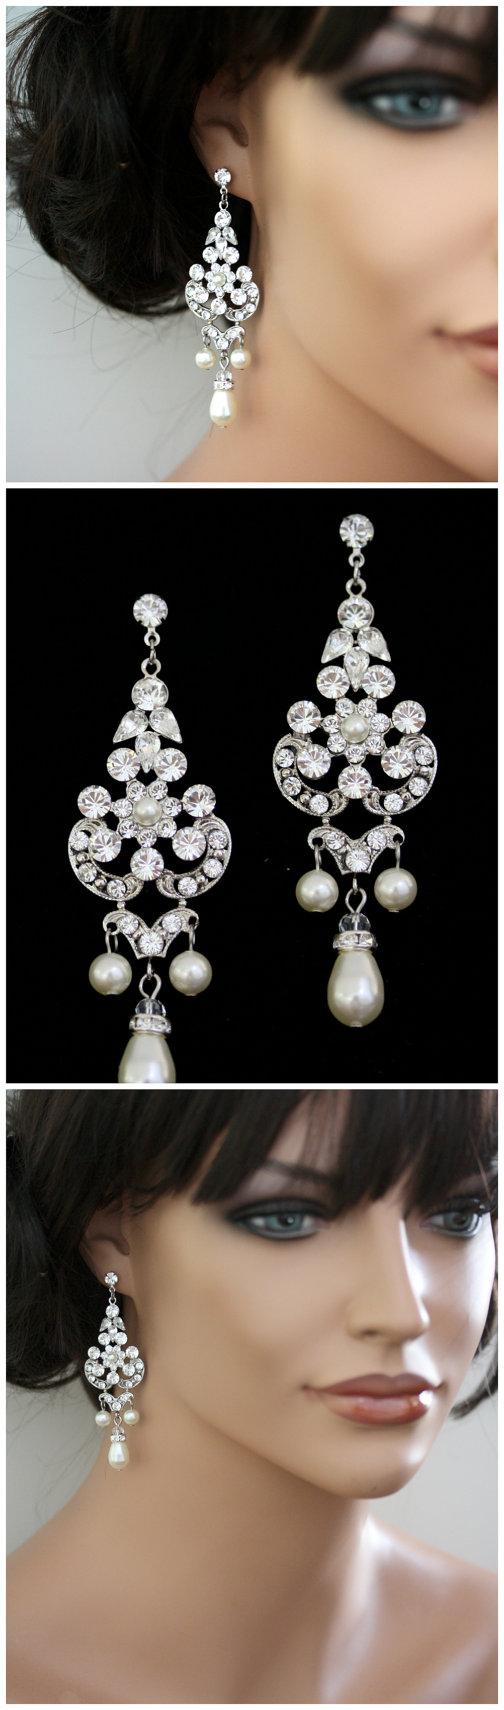 Mariage - Chandelier Bridal Earrings Statement Wedding Earrings Swarovski Rhinestone Crystal Pearl Teardrop Vintage Wedding Jewelry CELESTE